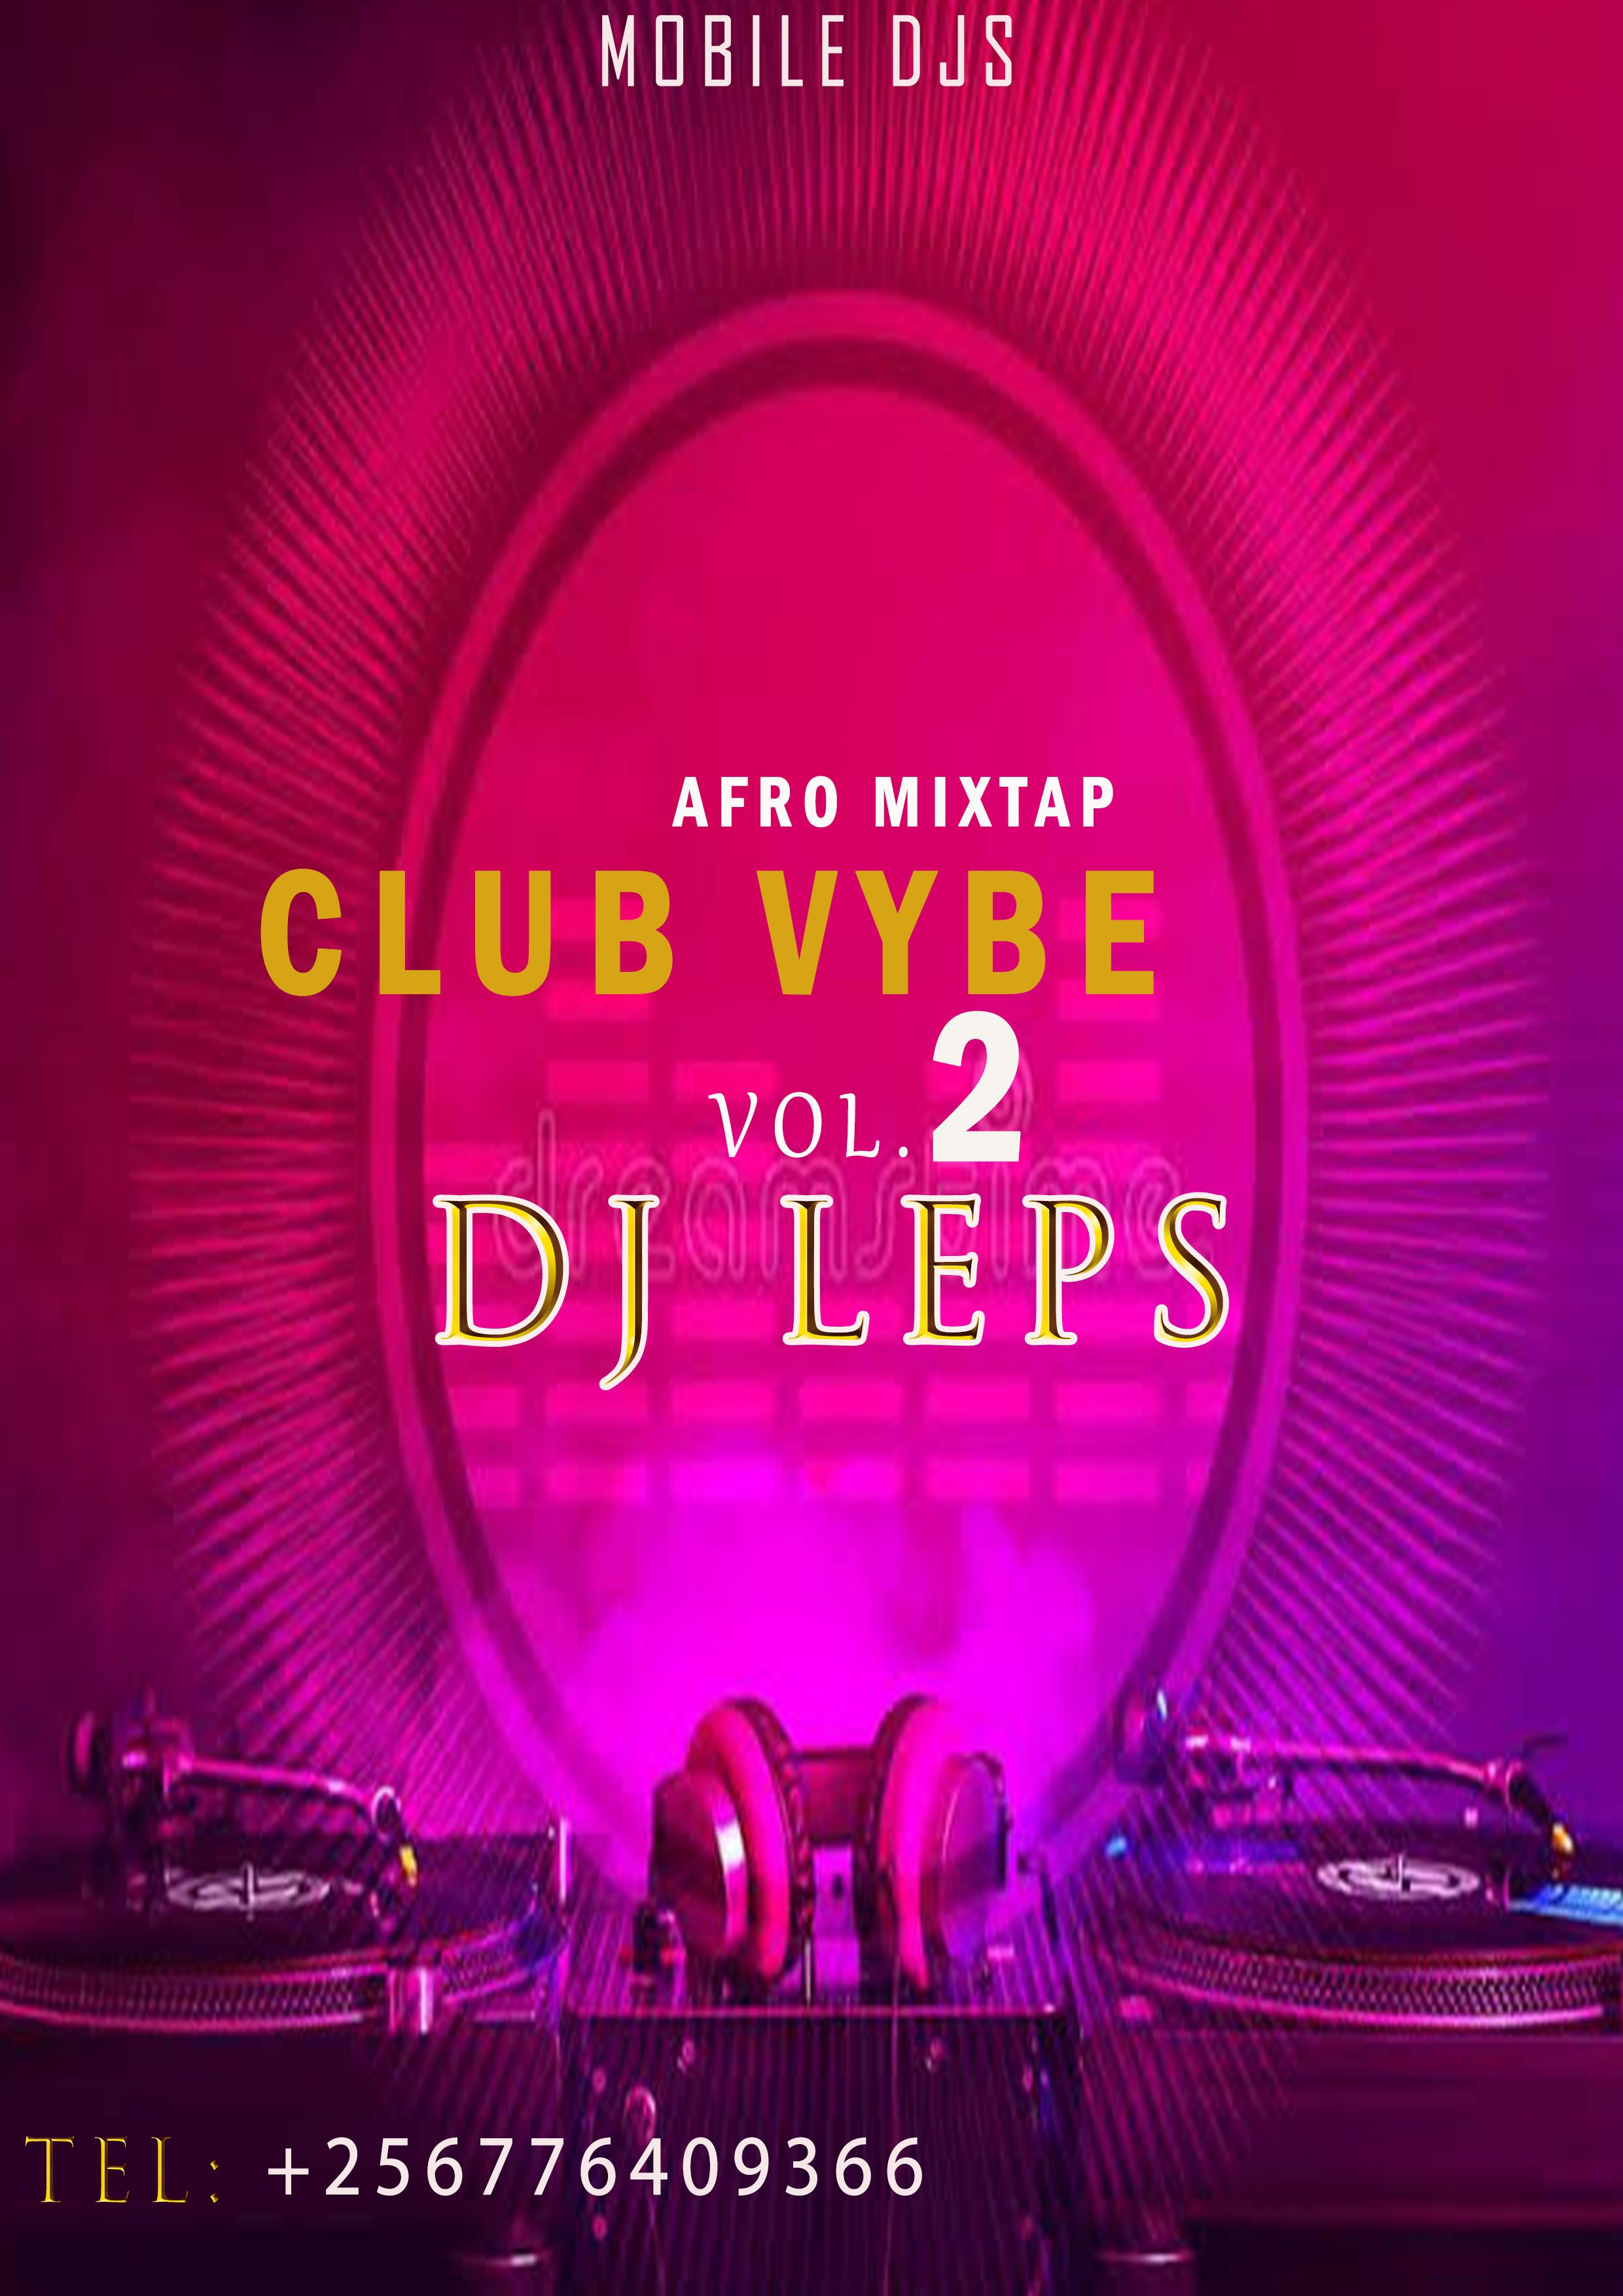 Club vybes mixtape